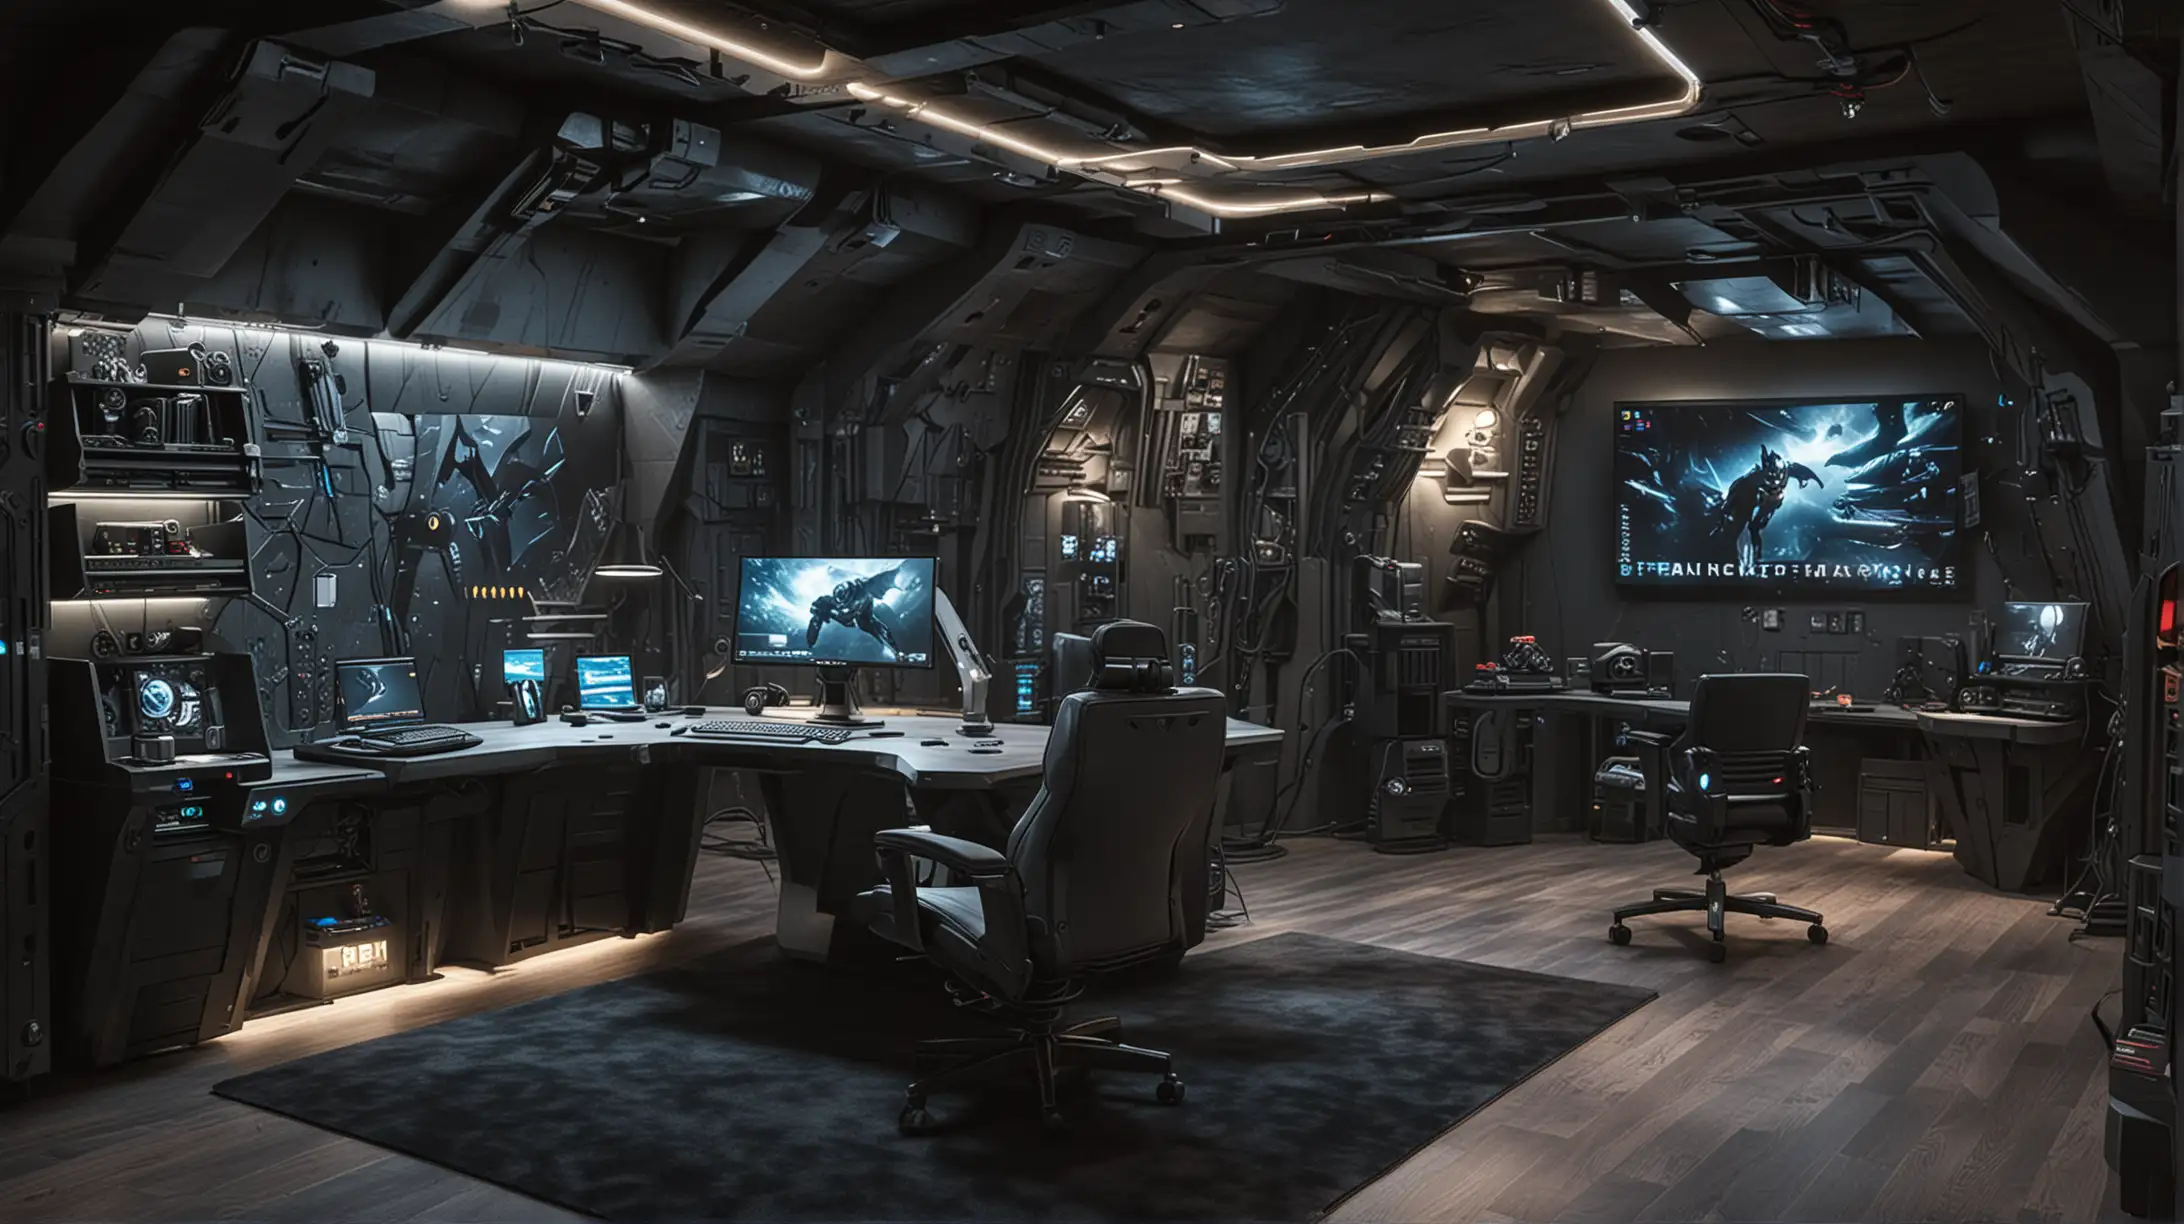 Elaborate futuristic computer desk setup and playroom mimicking the aesthetics of Batcave.